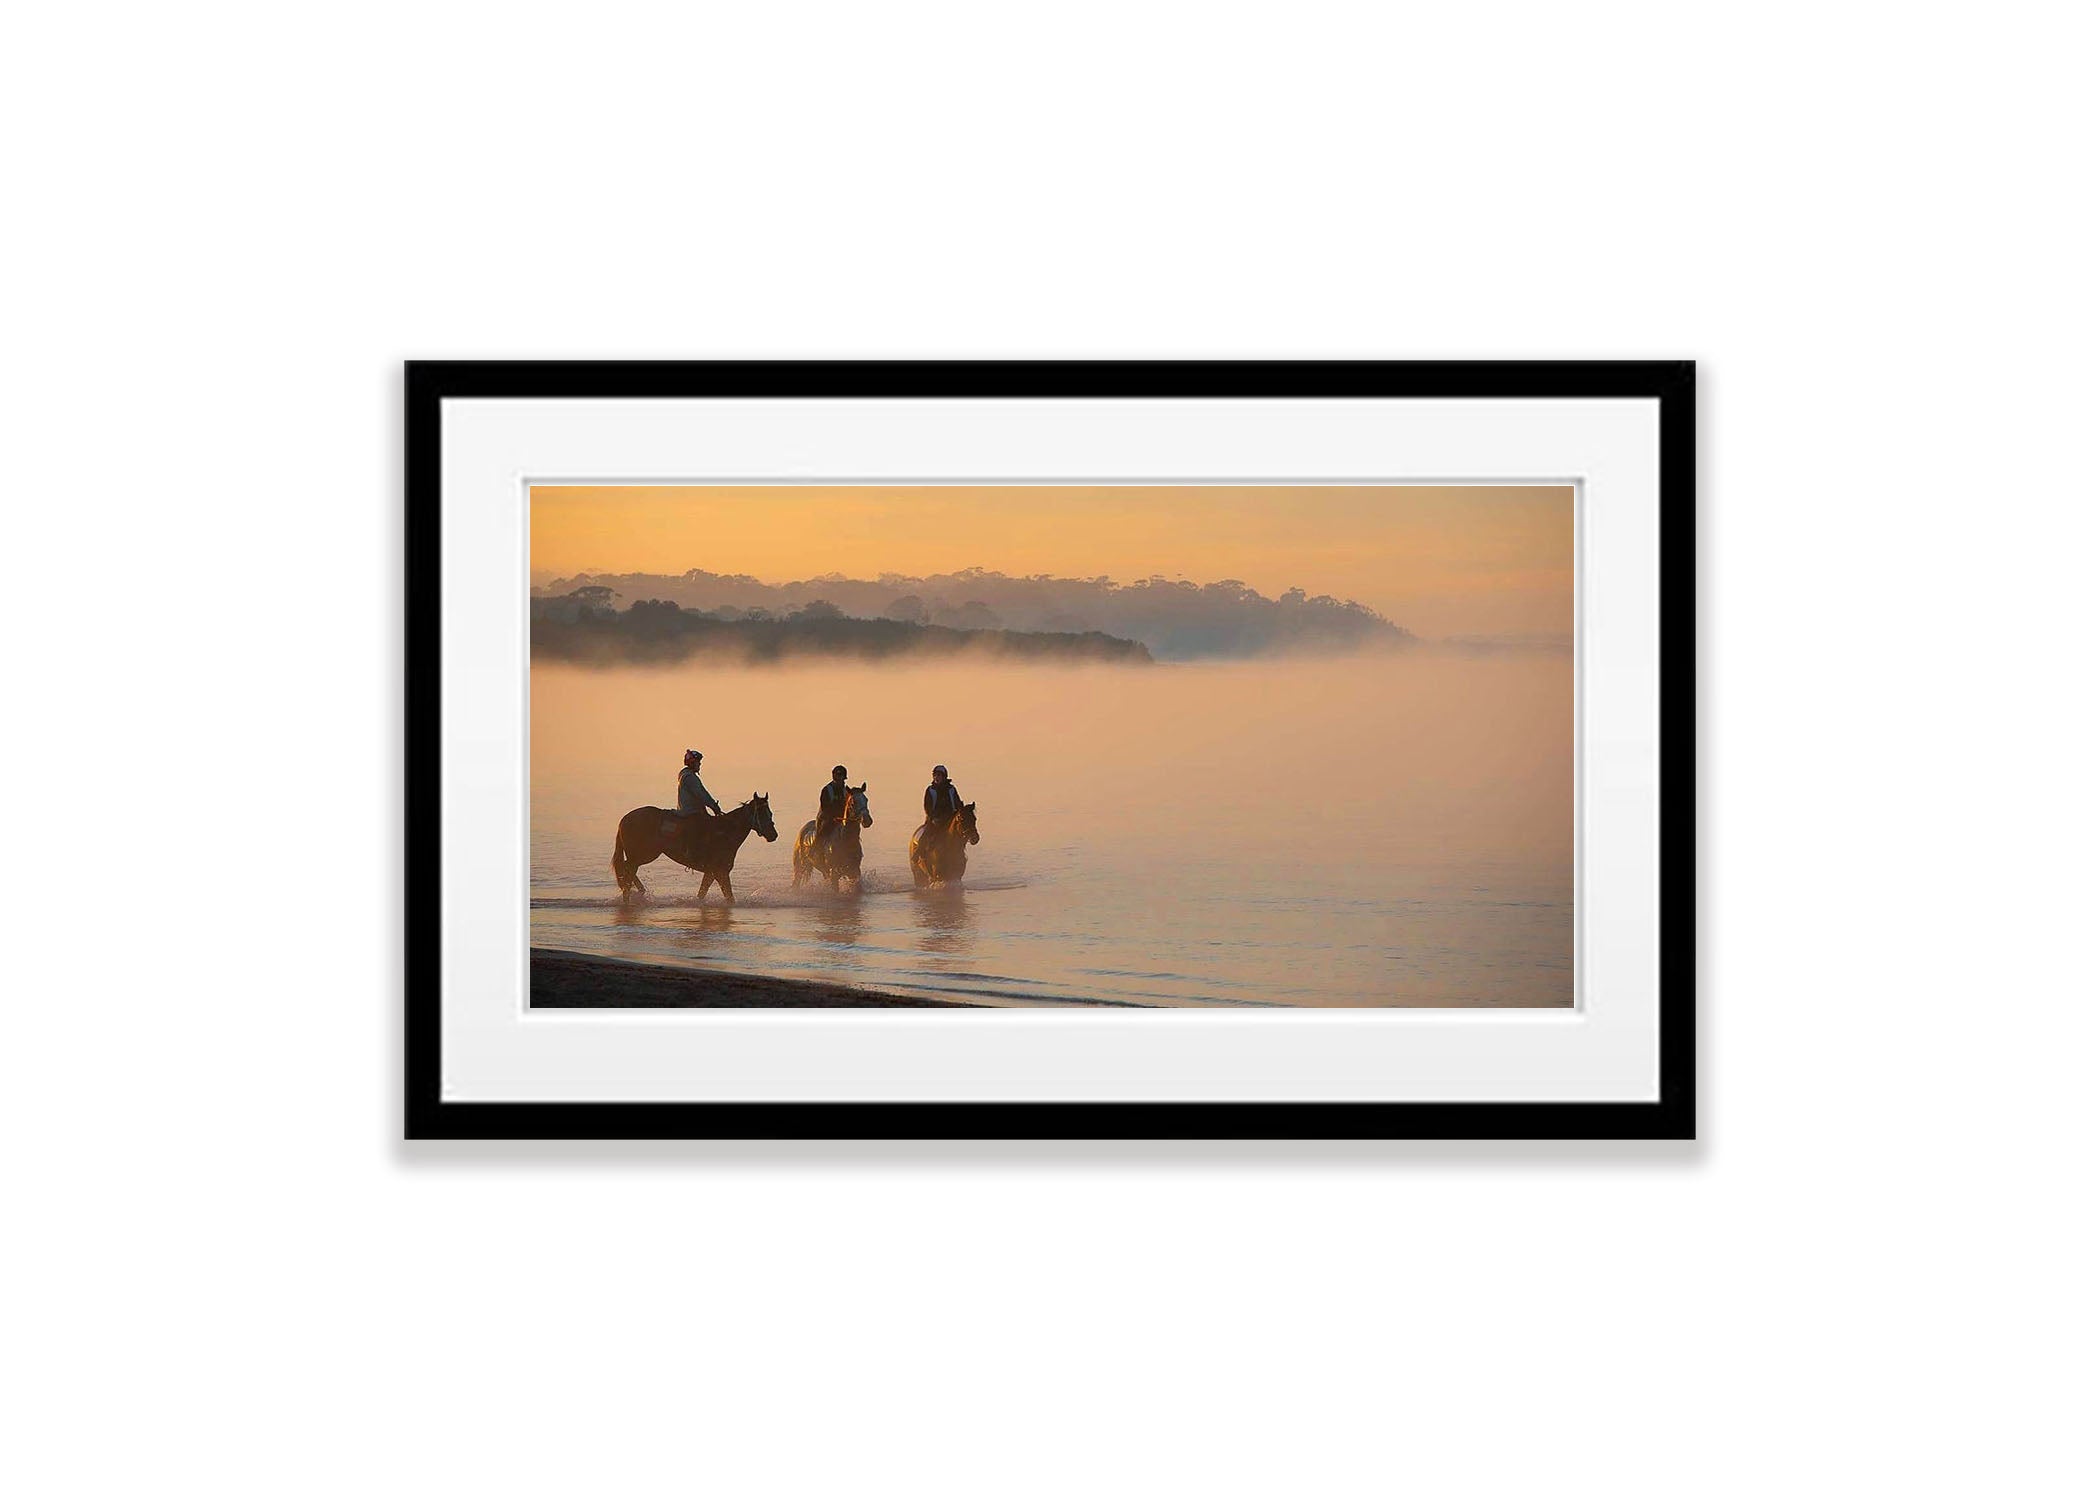 Balnarring Horses #4, Mornington Peninsula, VIC